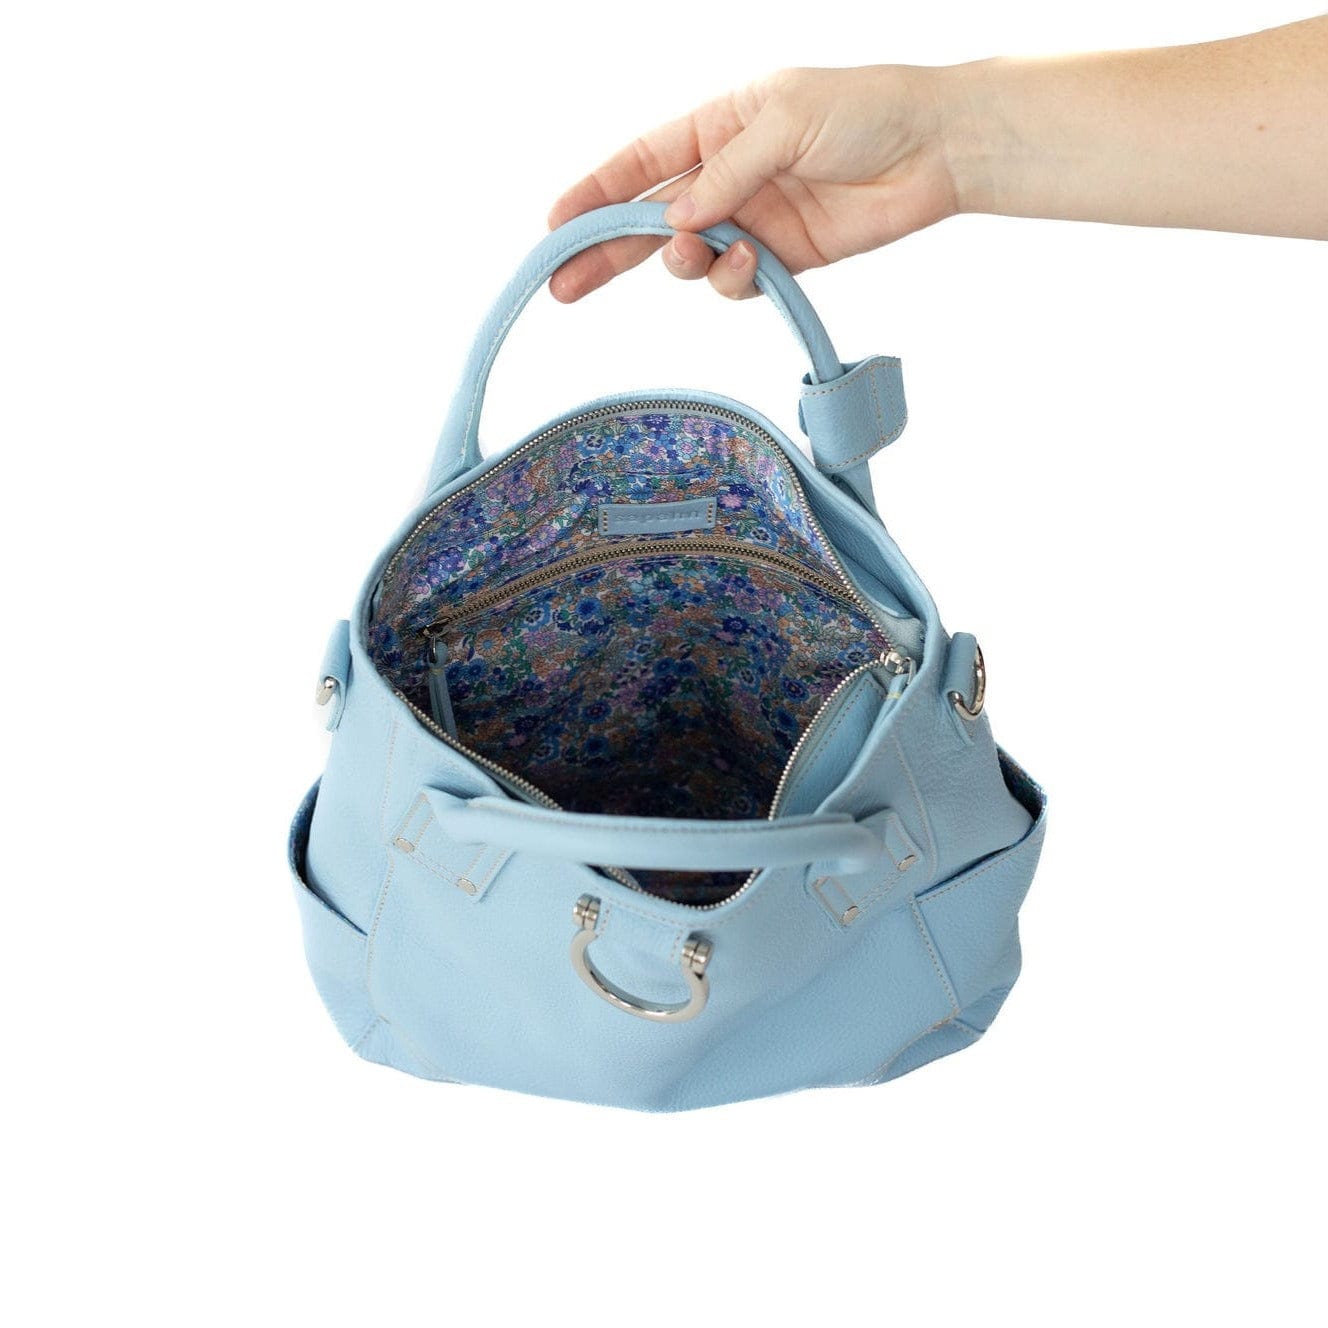 Chloe Convertible Backpack and Crossbody Bag